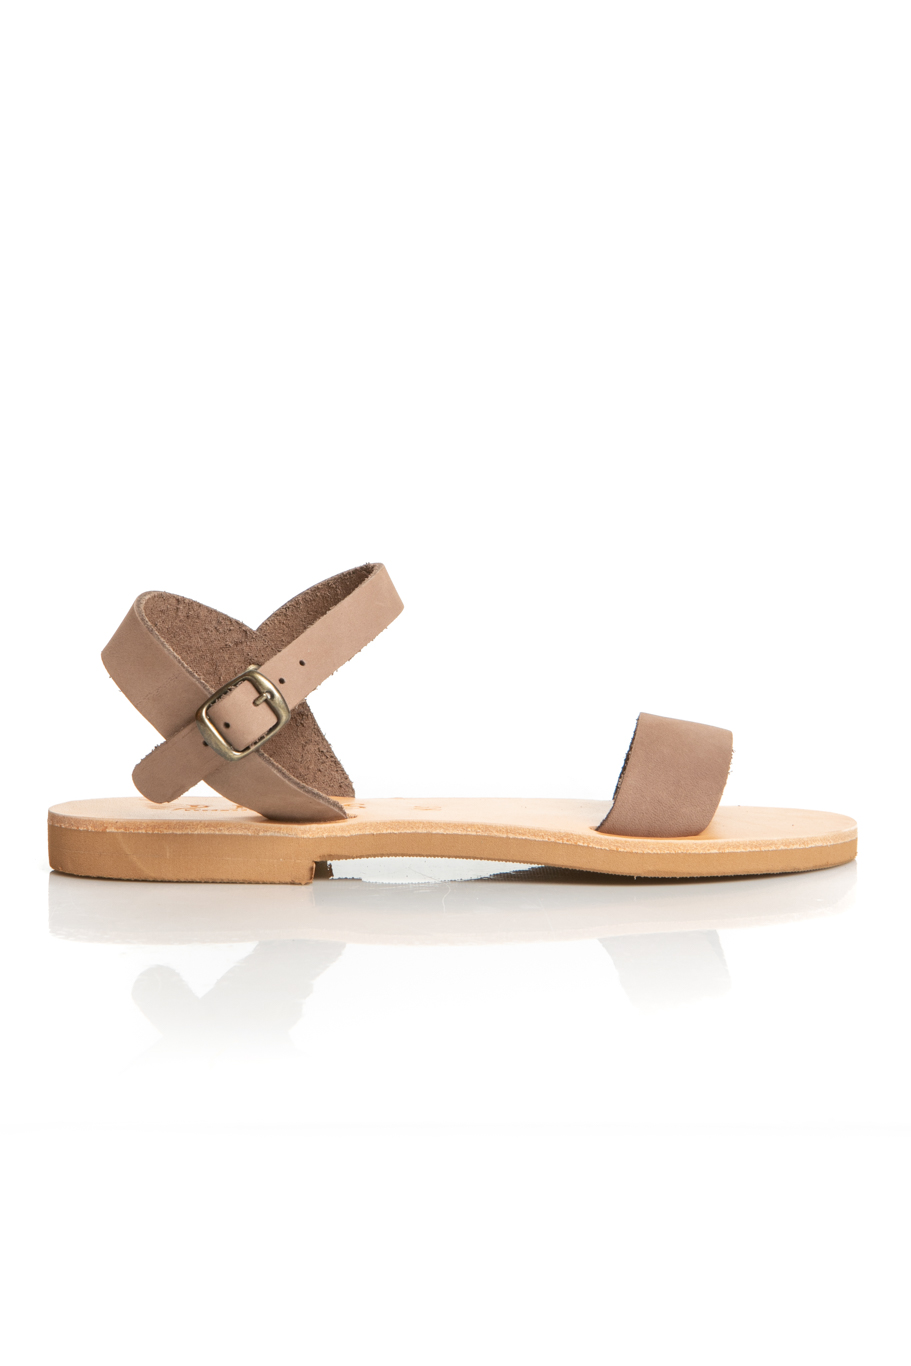 Simple sandals (7/11) – GREY